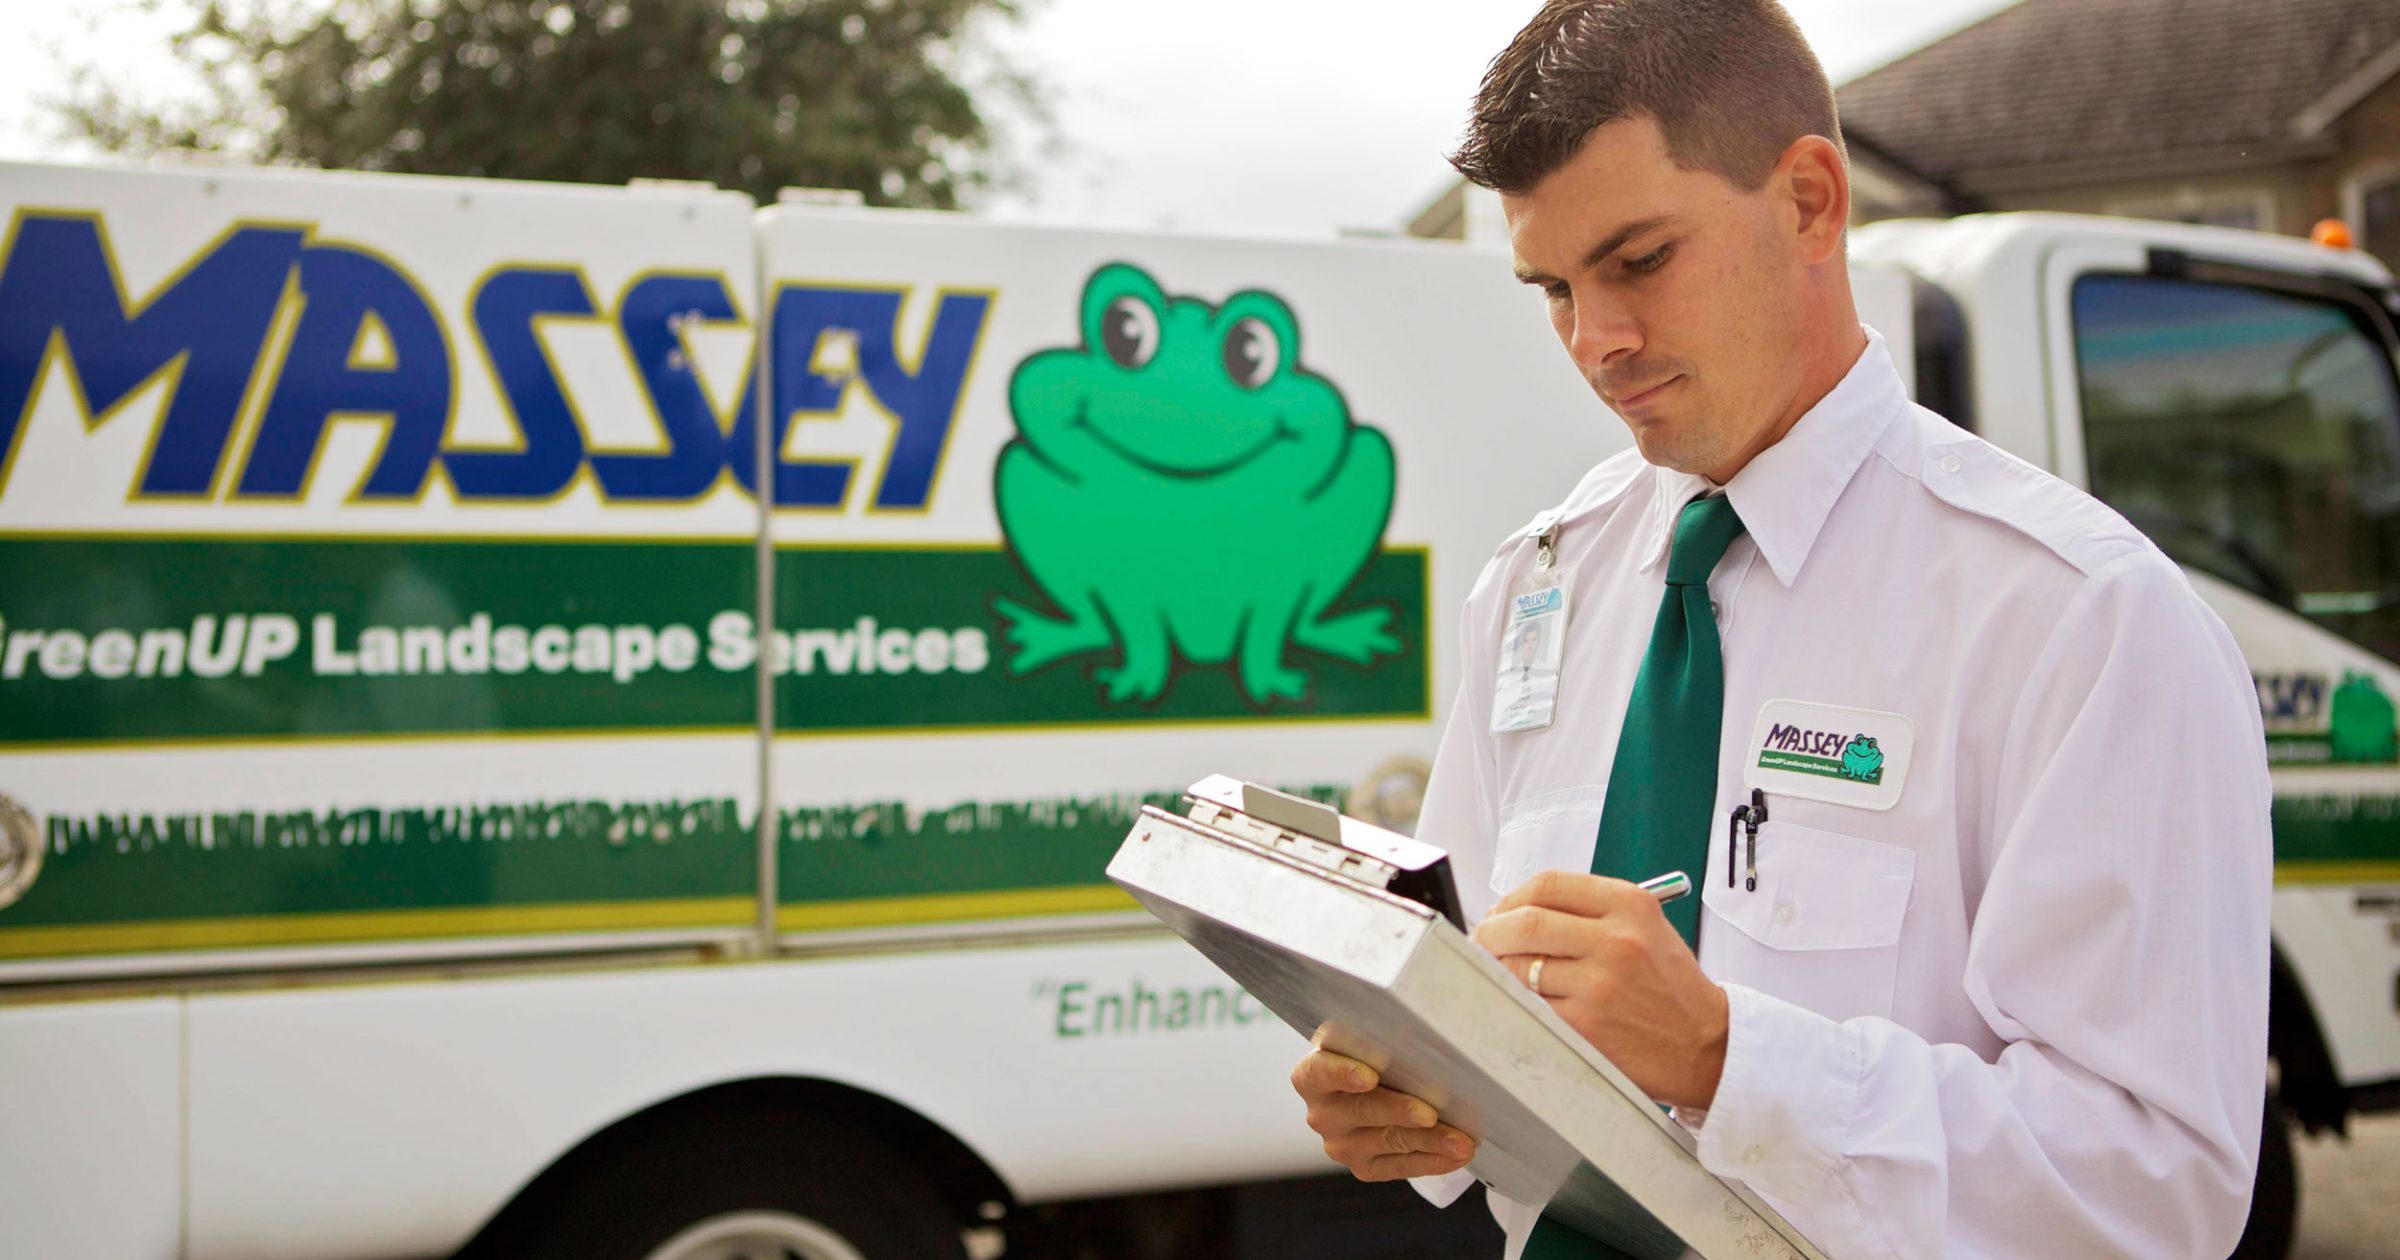 Massey Services - Pest Control, Termite Inspection & Lawn Services
